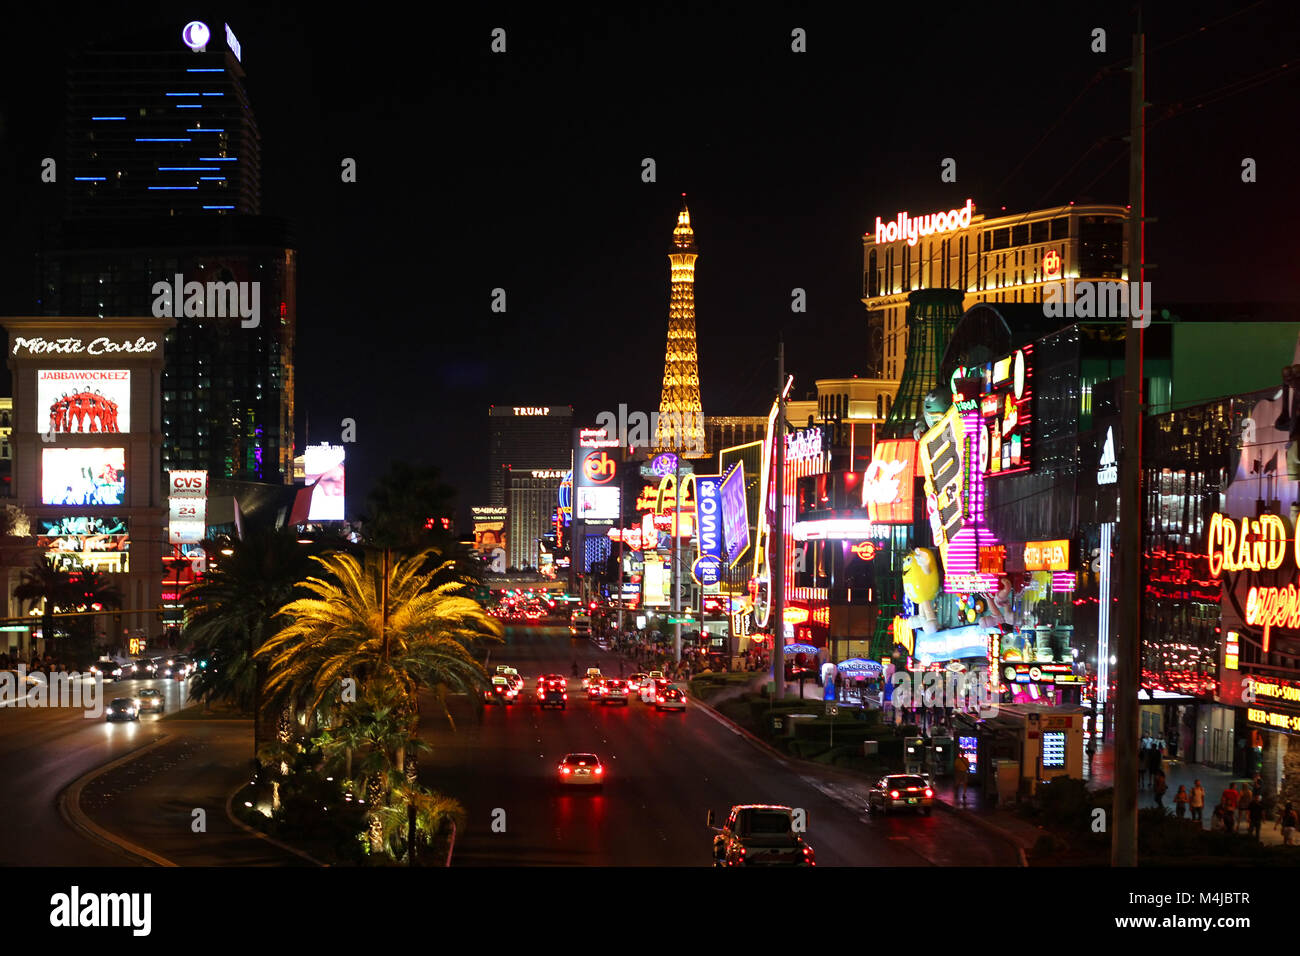 Las Vegas strip skyline and street scene at night Stock Photo